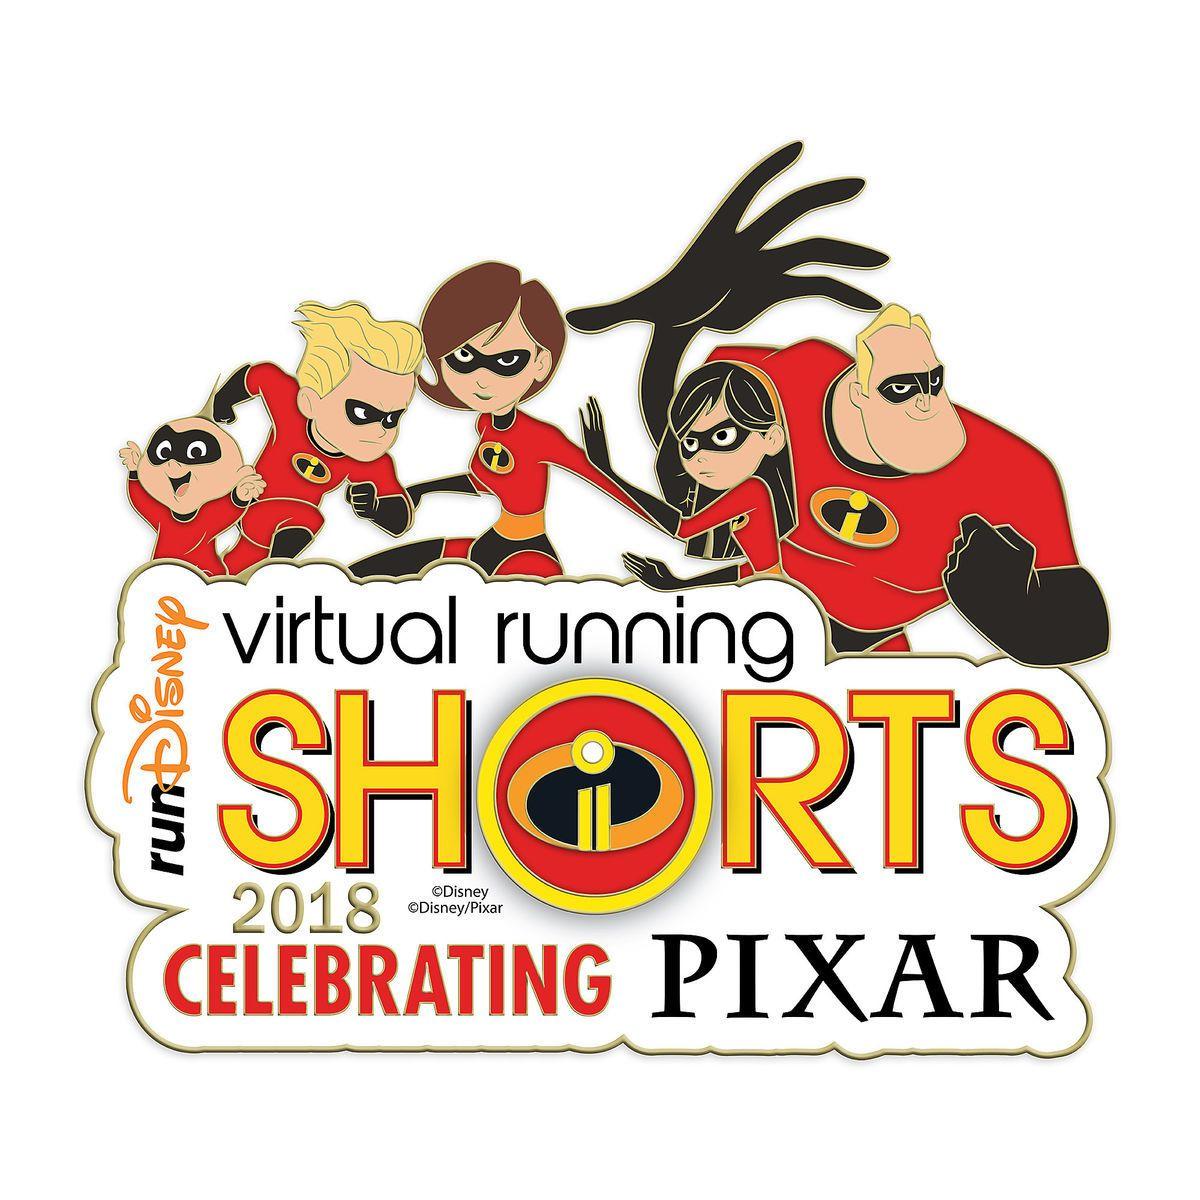 Incredible the Pixar Logo - runDisney Incredibles 2 Virtual Running Shorts 2018 Pin